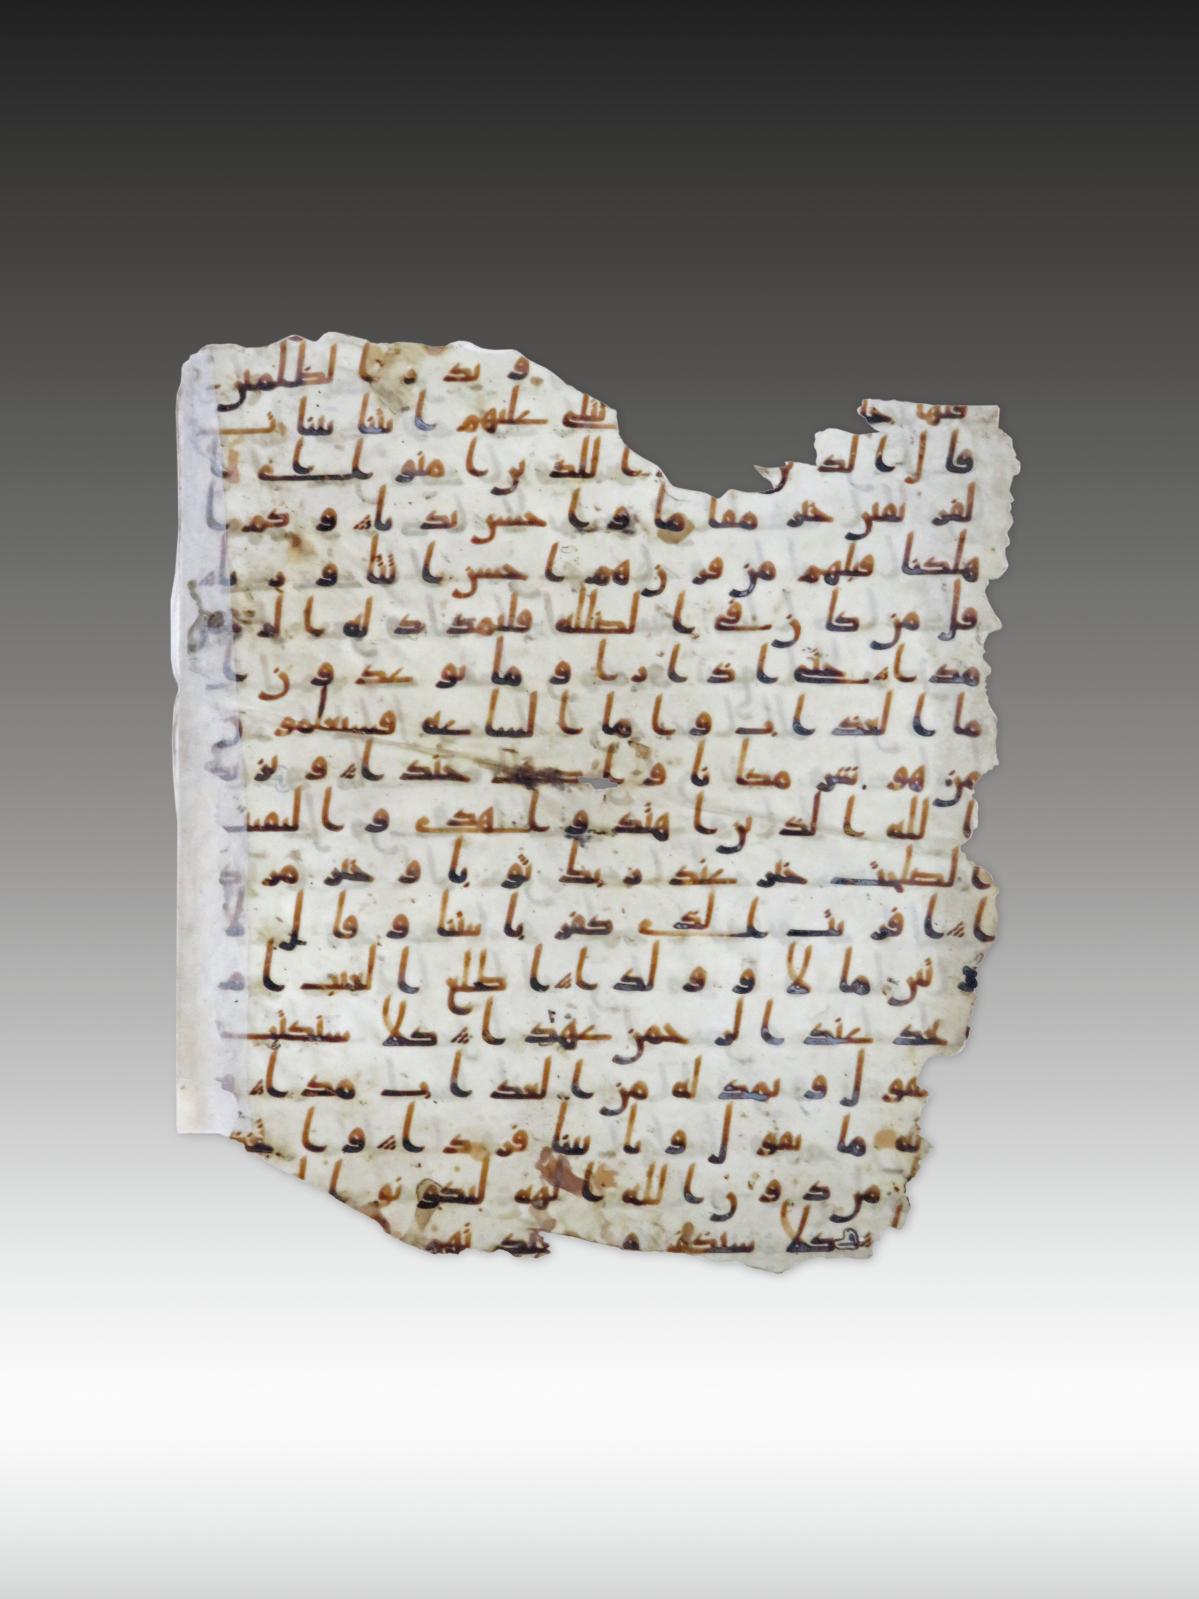 Coran du VIIIe siècle